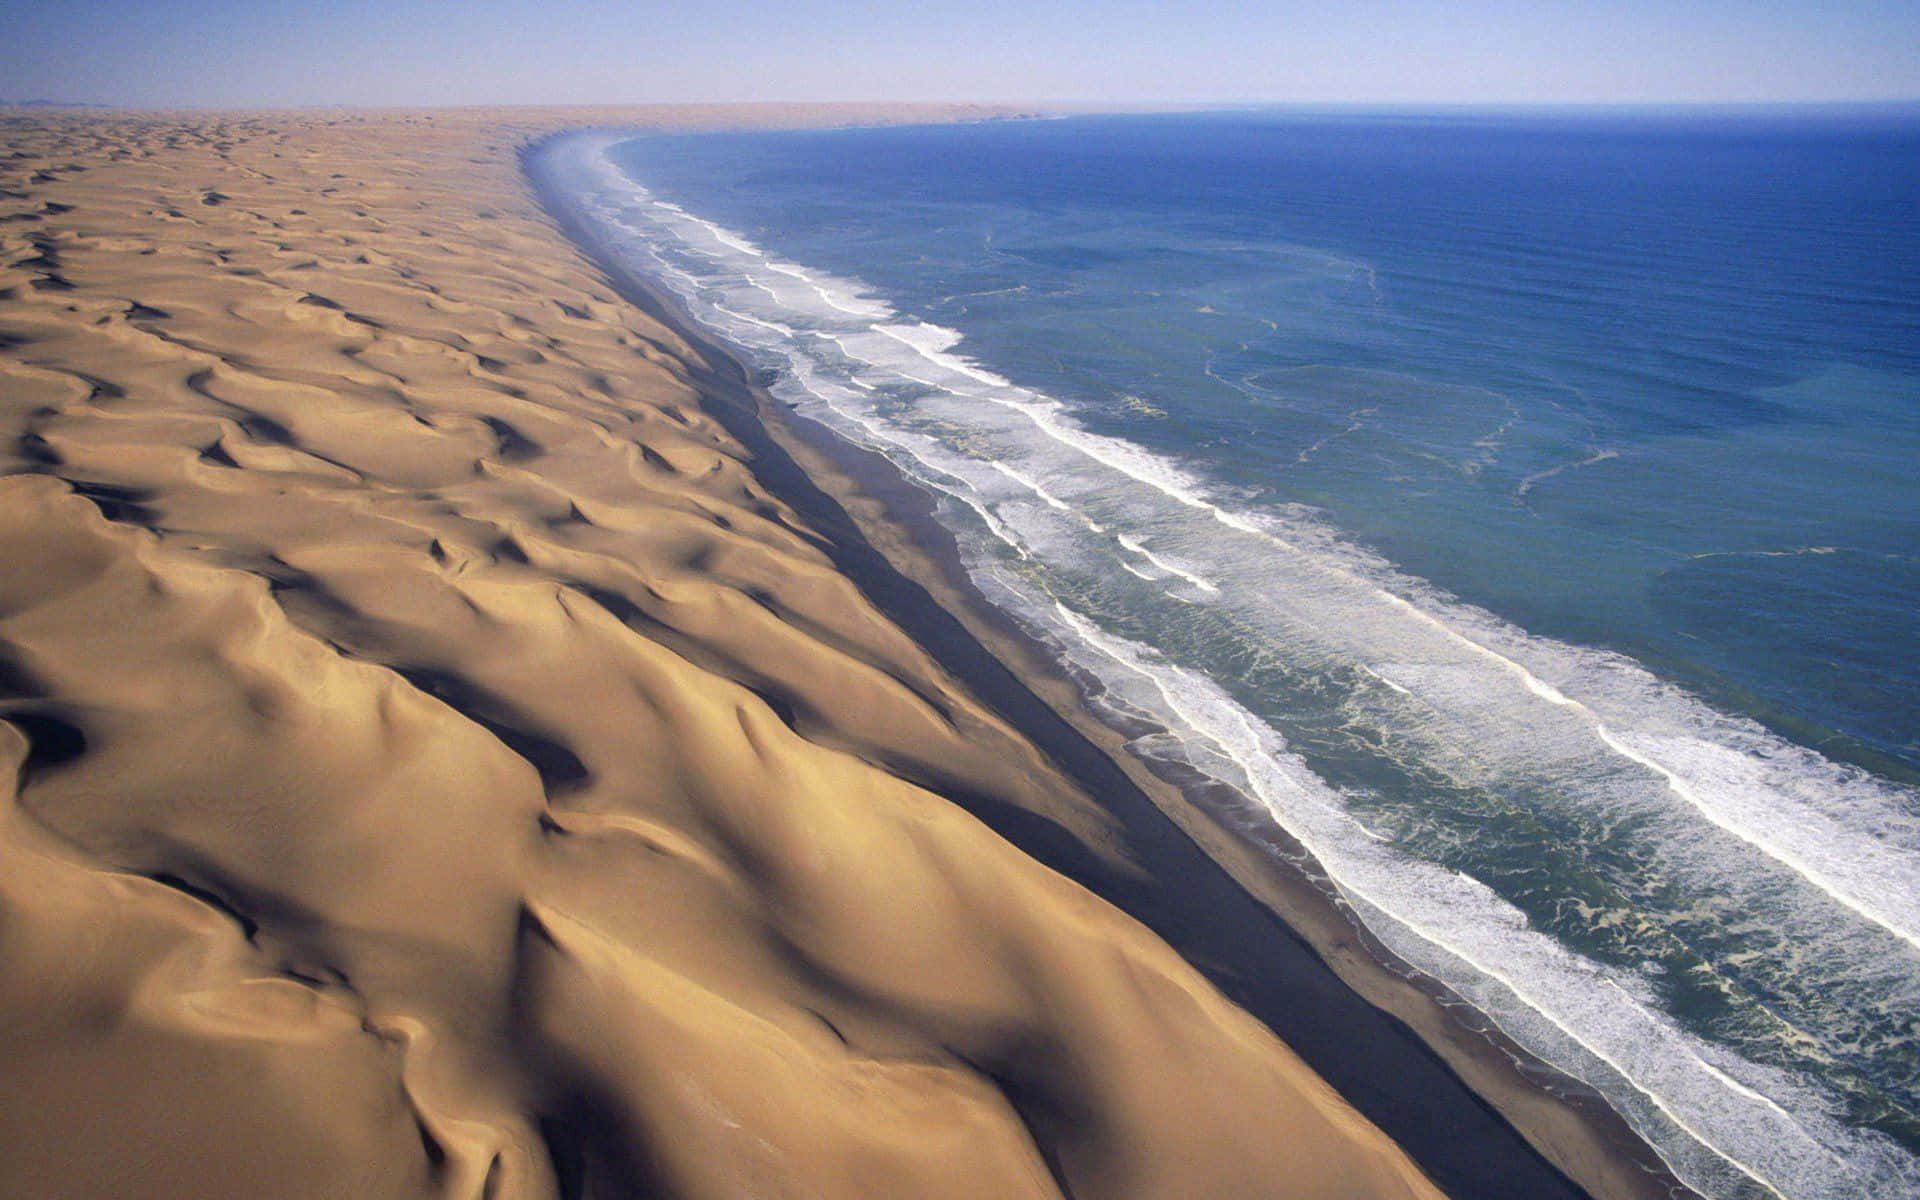 Take a journey through the stunning desert of Dune